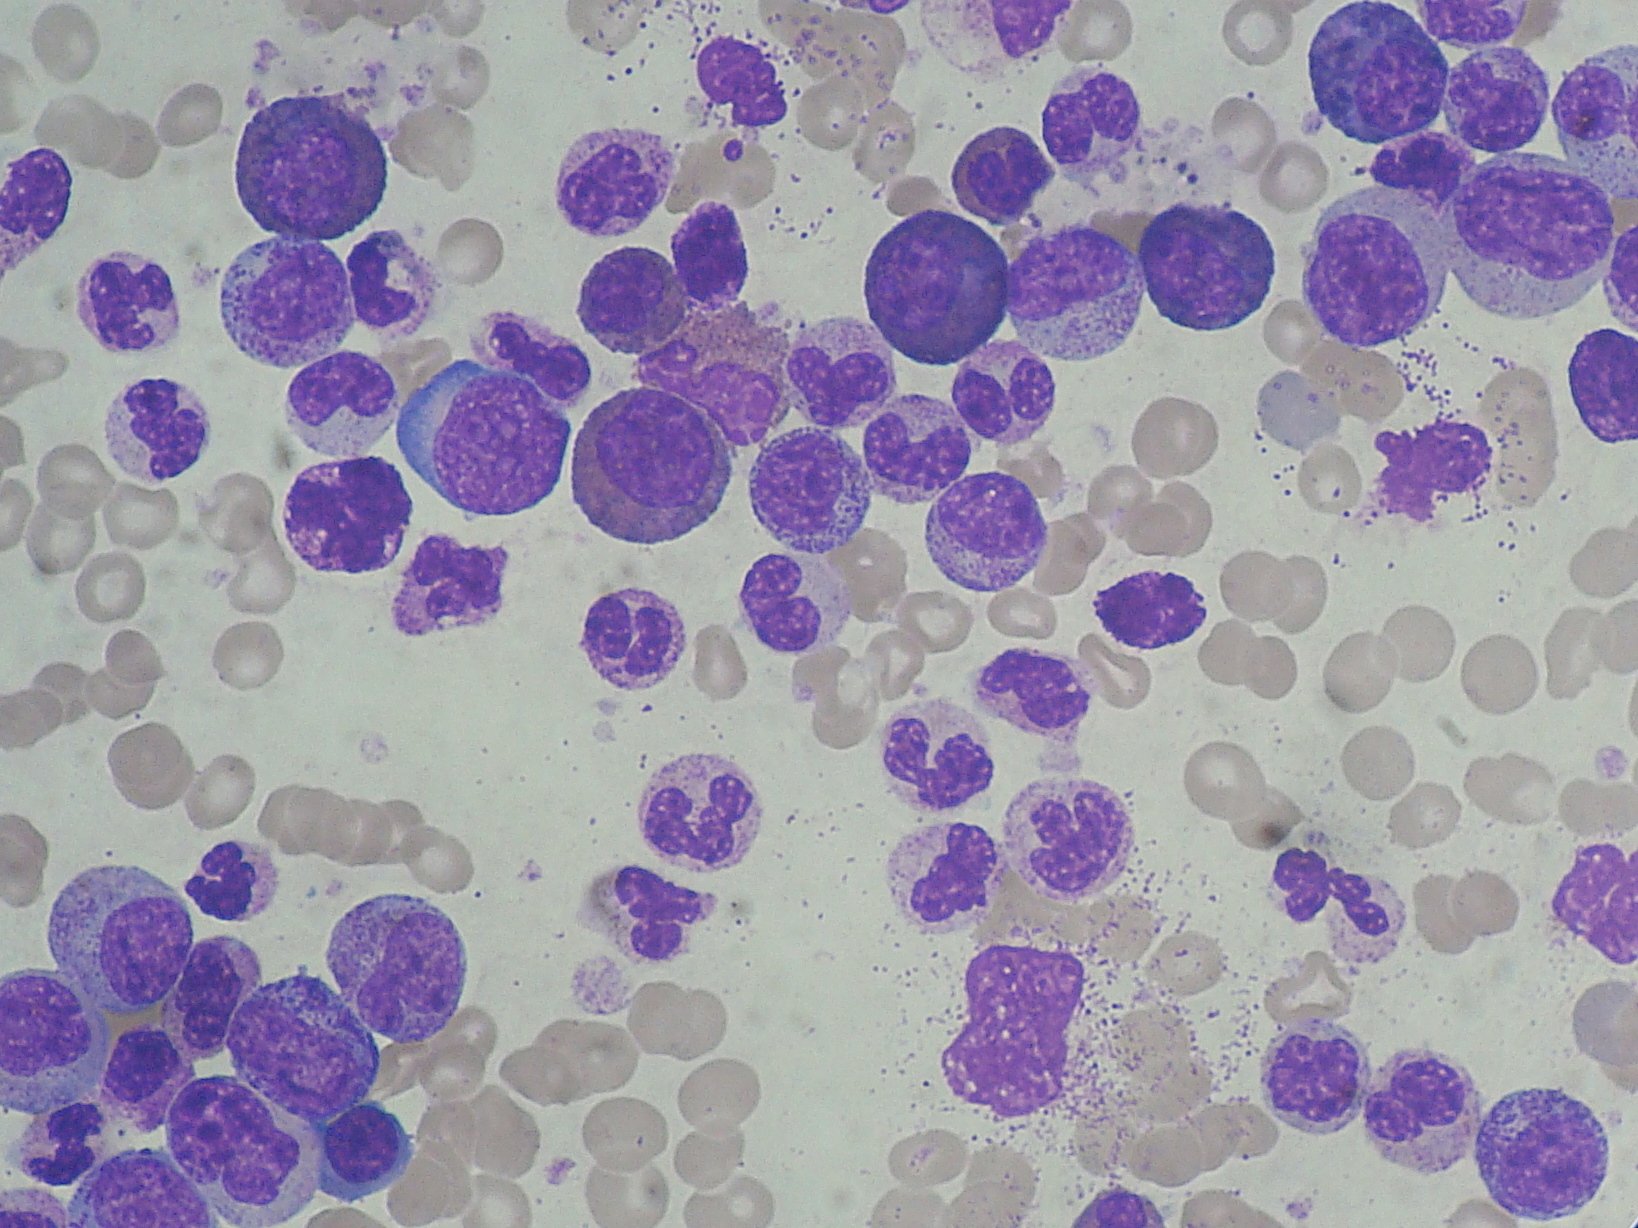 Leucemia mieloide al microscopio